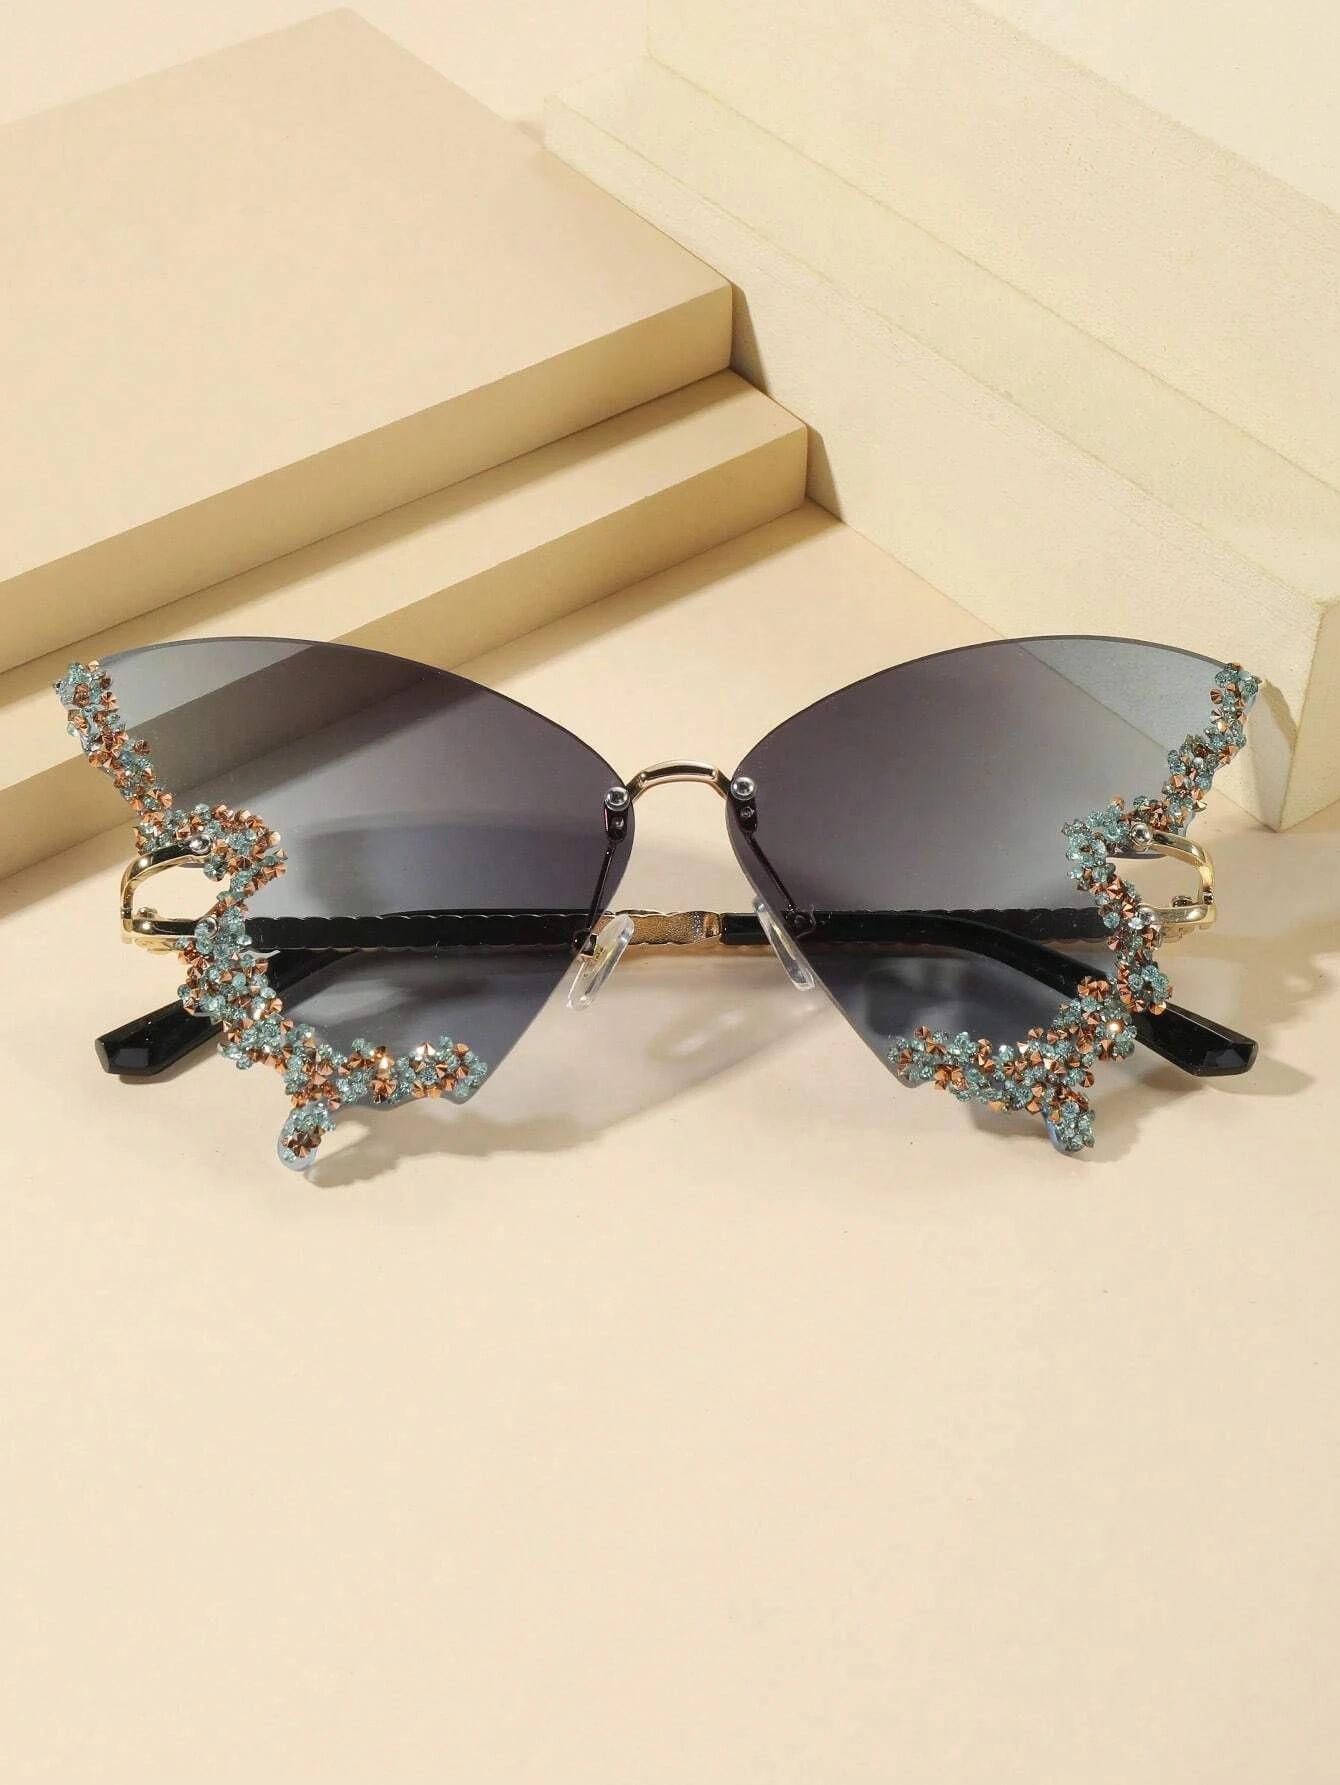 1pair Women Rhinestone Decor Butterfly Design Fashionable Fashion Glasses, For Travel | SHEIN